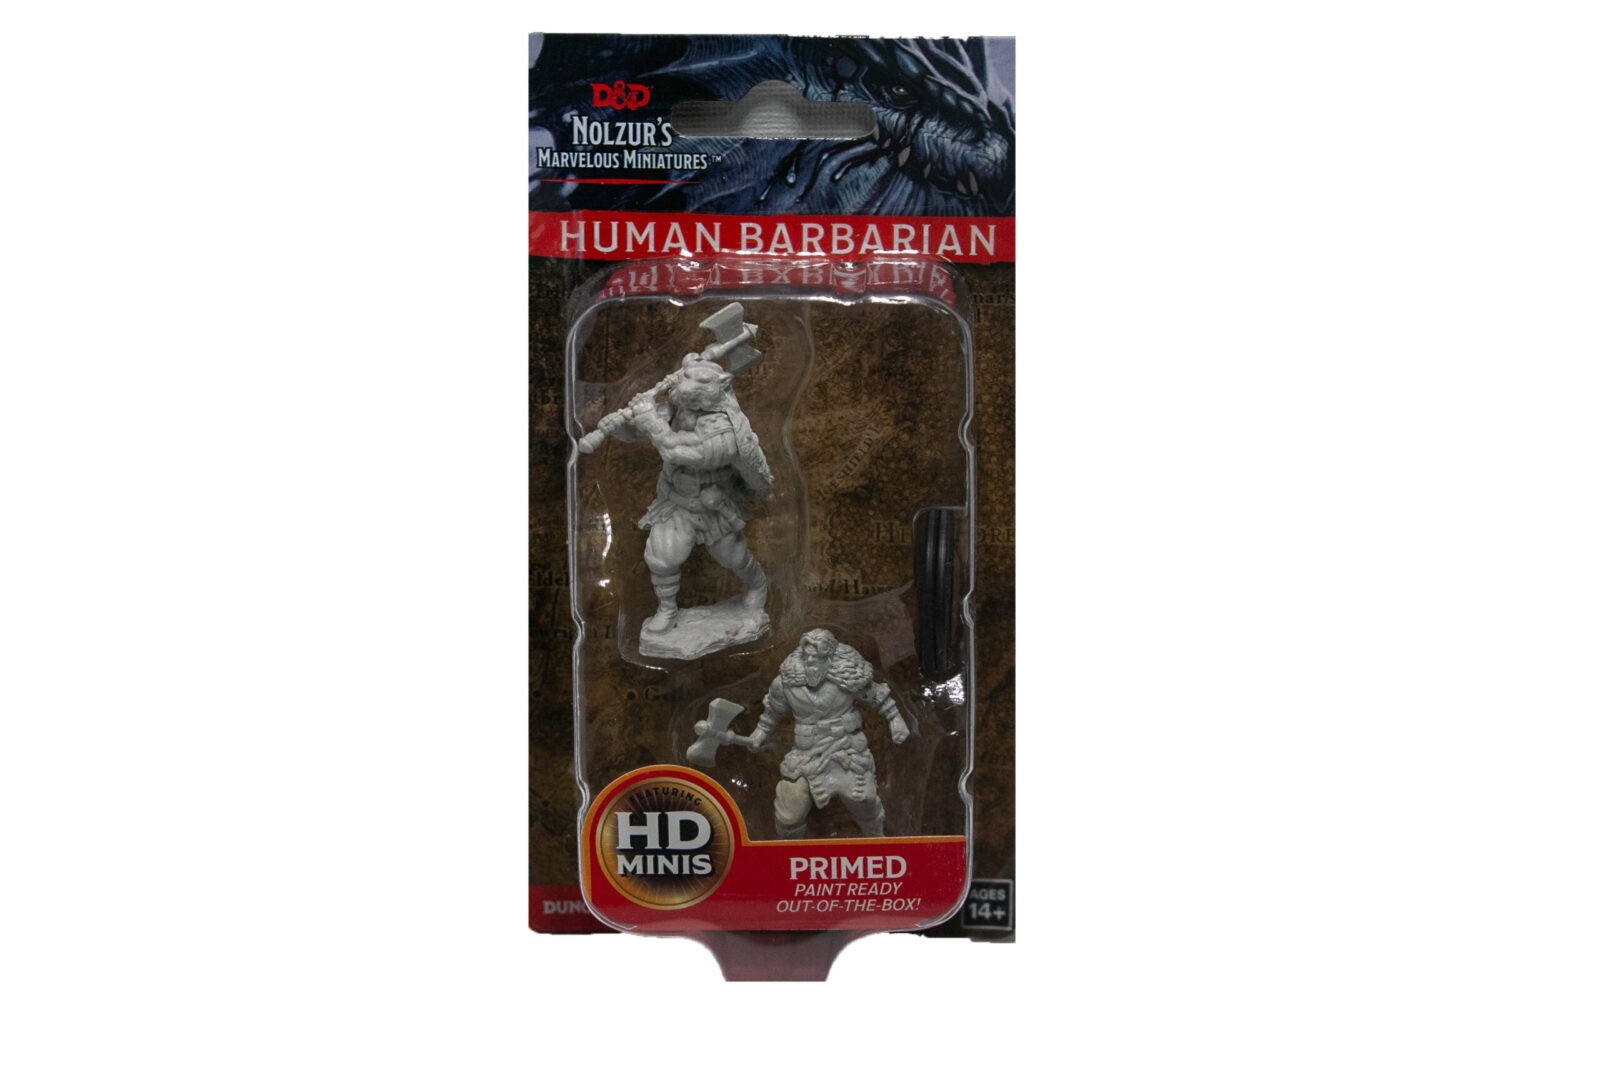 Human Barbarian